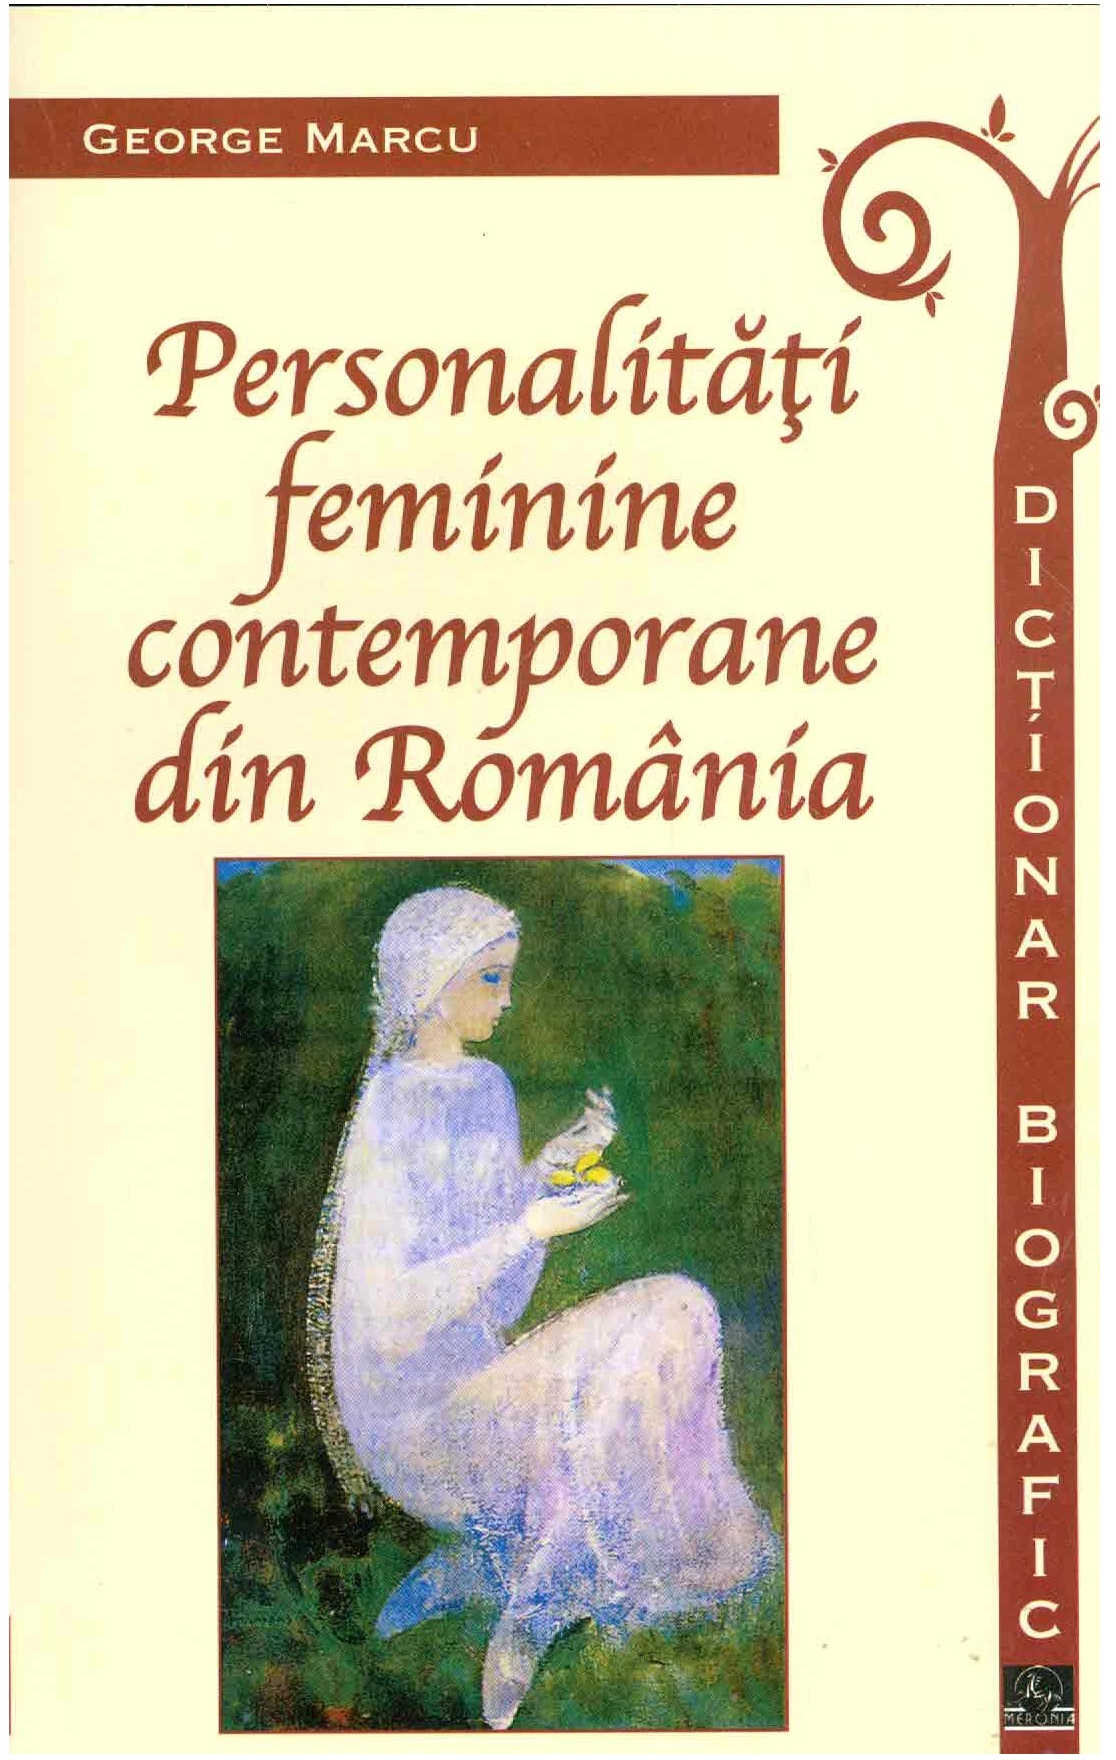 Personalitati feminine contemporane din Romania. Dictionar biografic | George Marcu biografic poza 2022